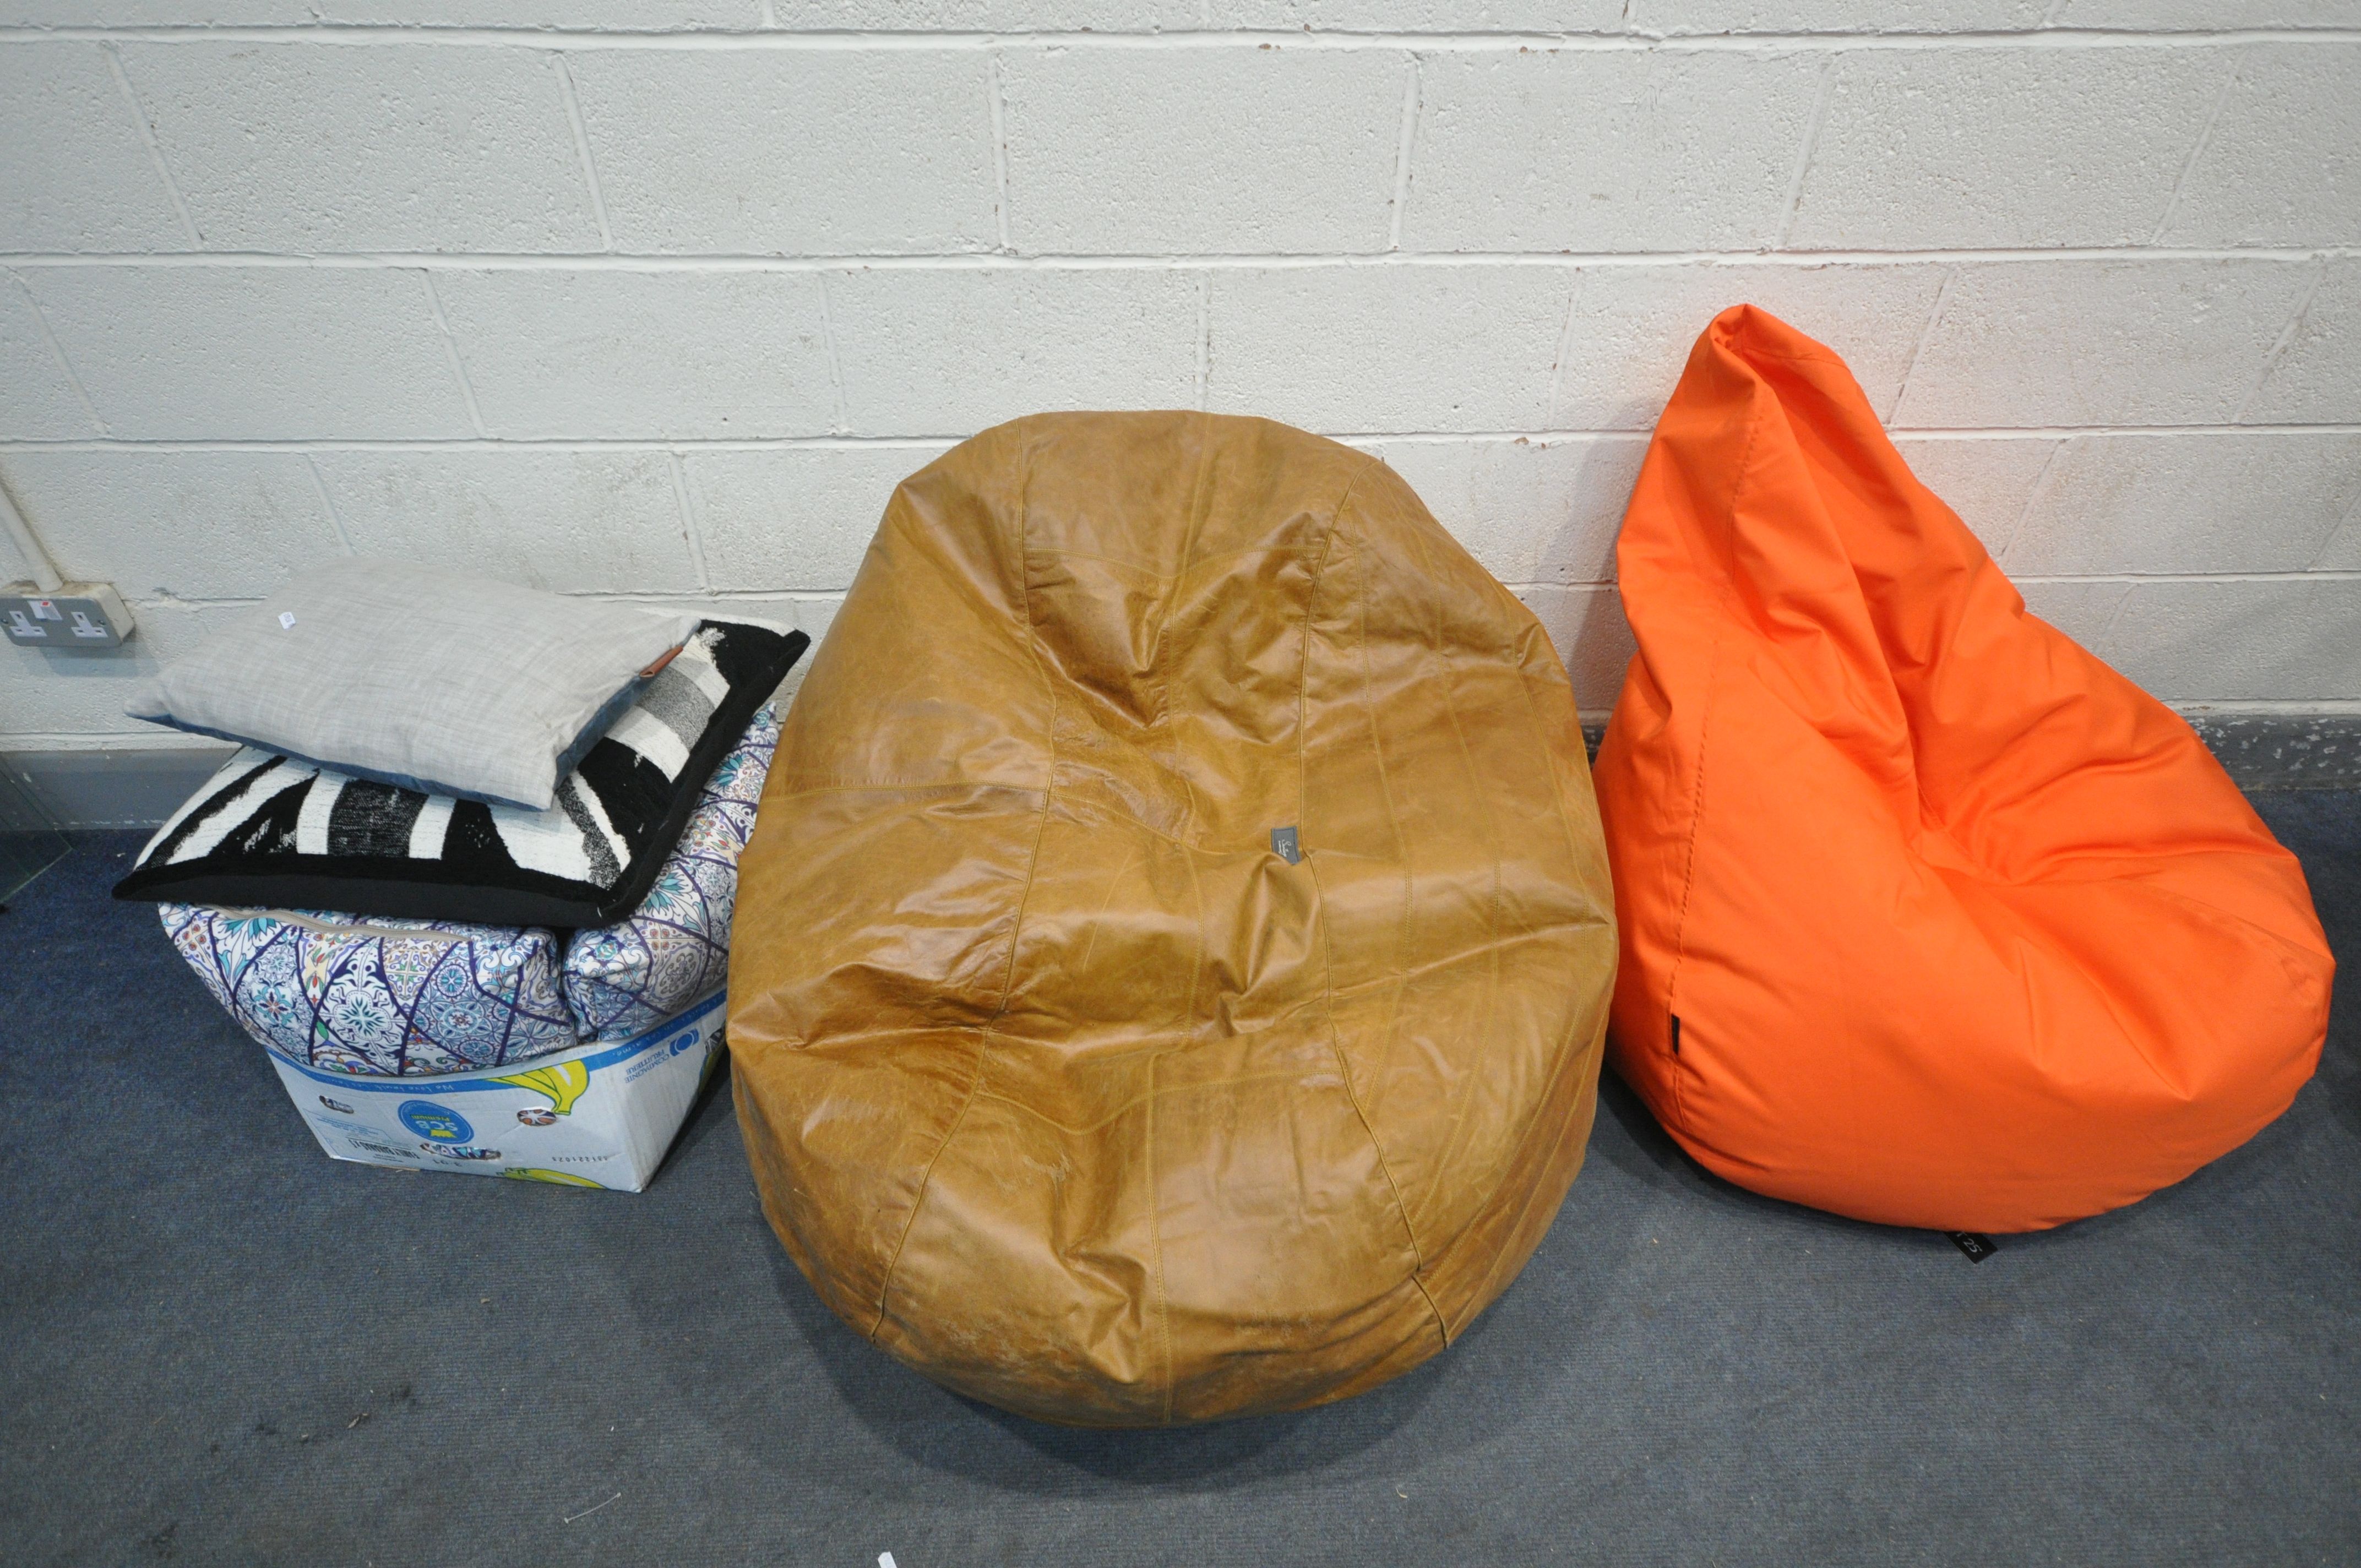 A COZIBAG.CO.UK LEATHER BEAN BAG, a Loft25 fluorescent orange bean bag, and a box of various